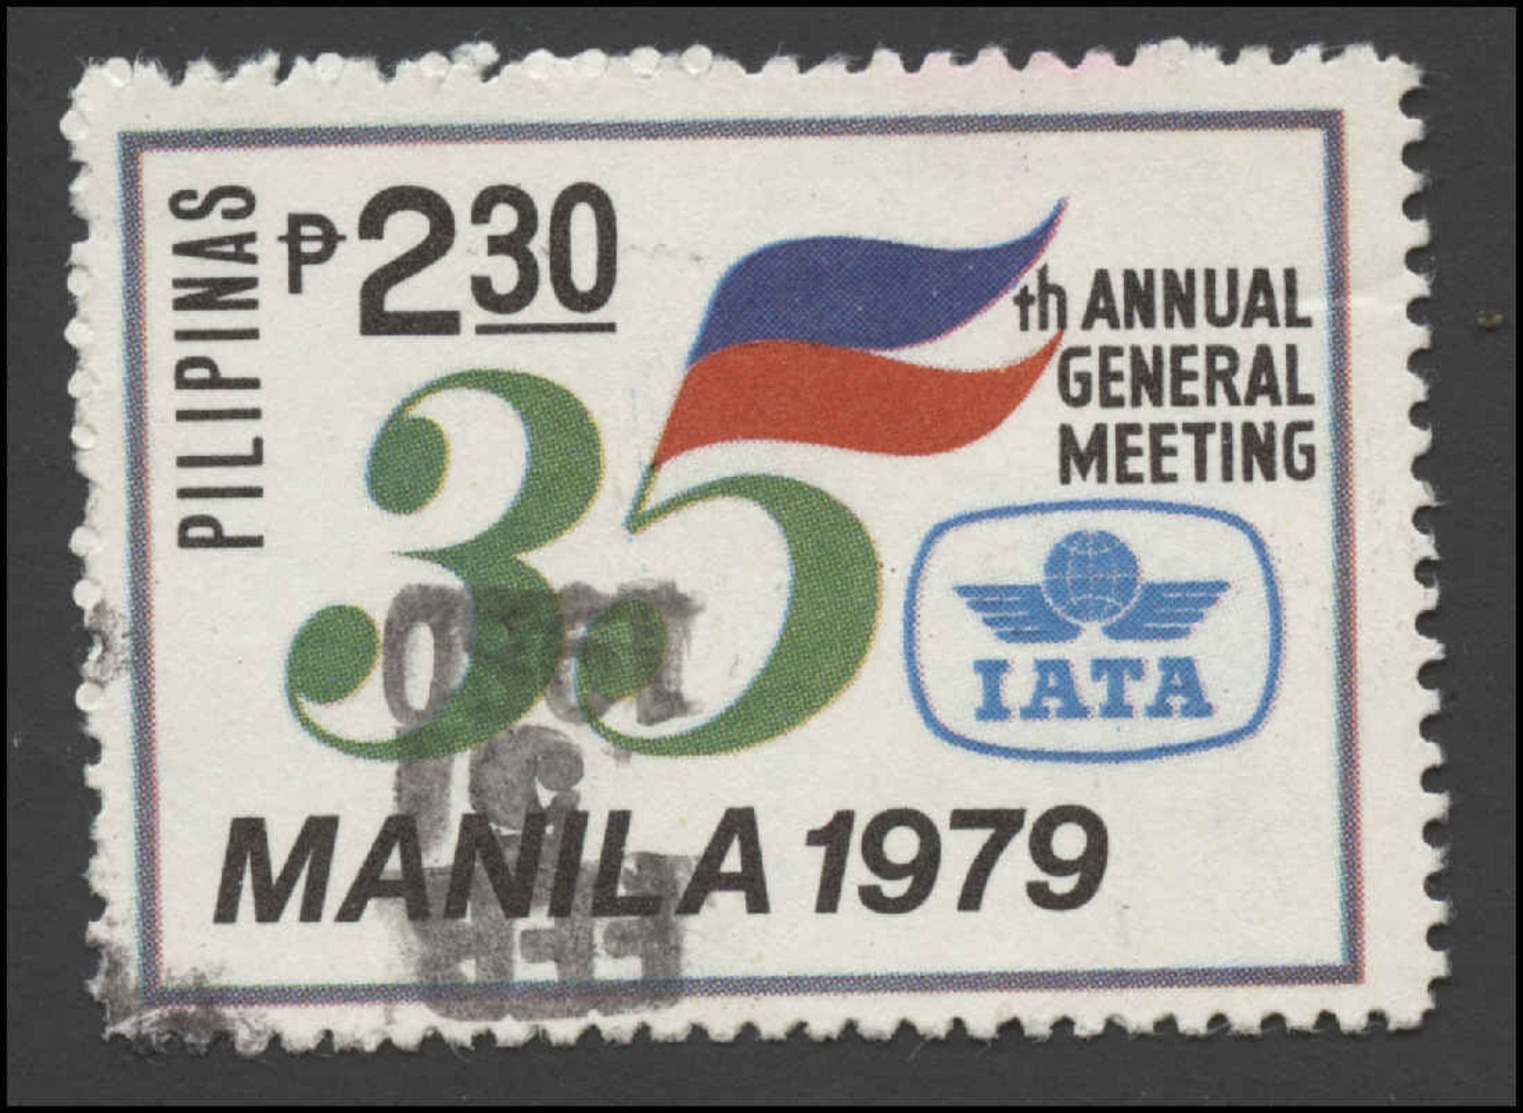 Philippines Scott #1442, 2.30p Multicolored (1979) Transport Association Emblem, Used - Philippinen